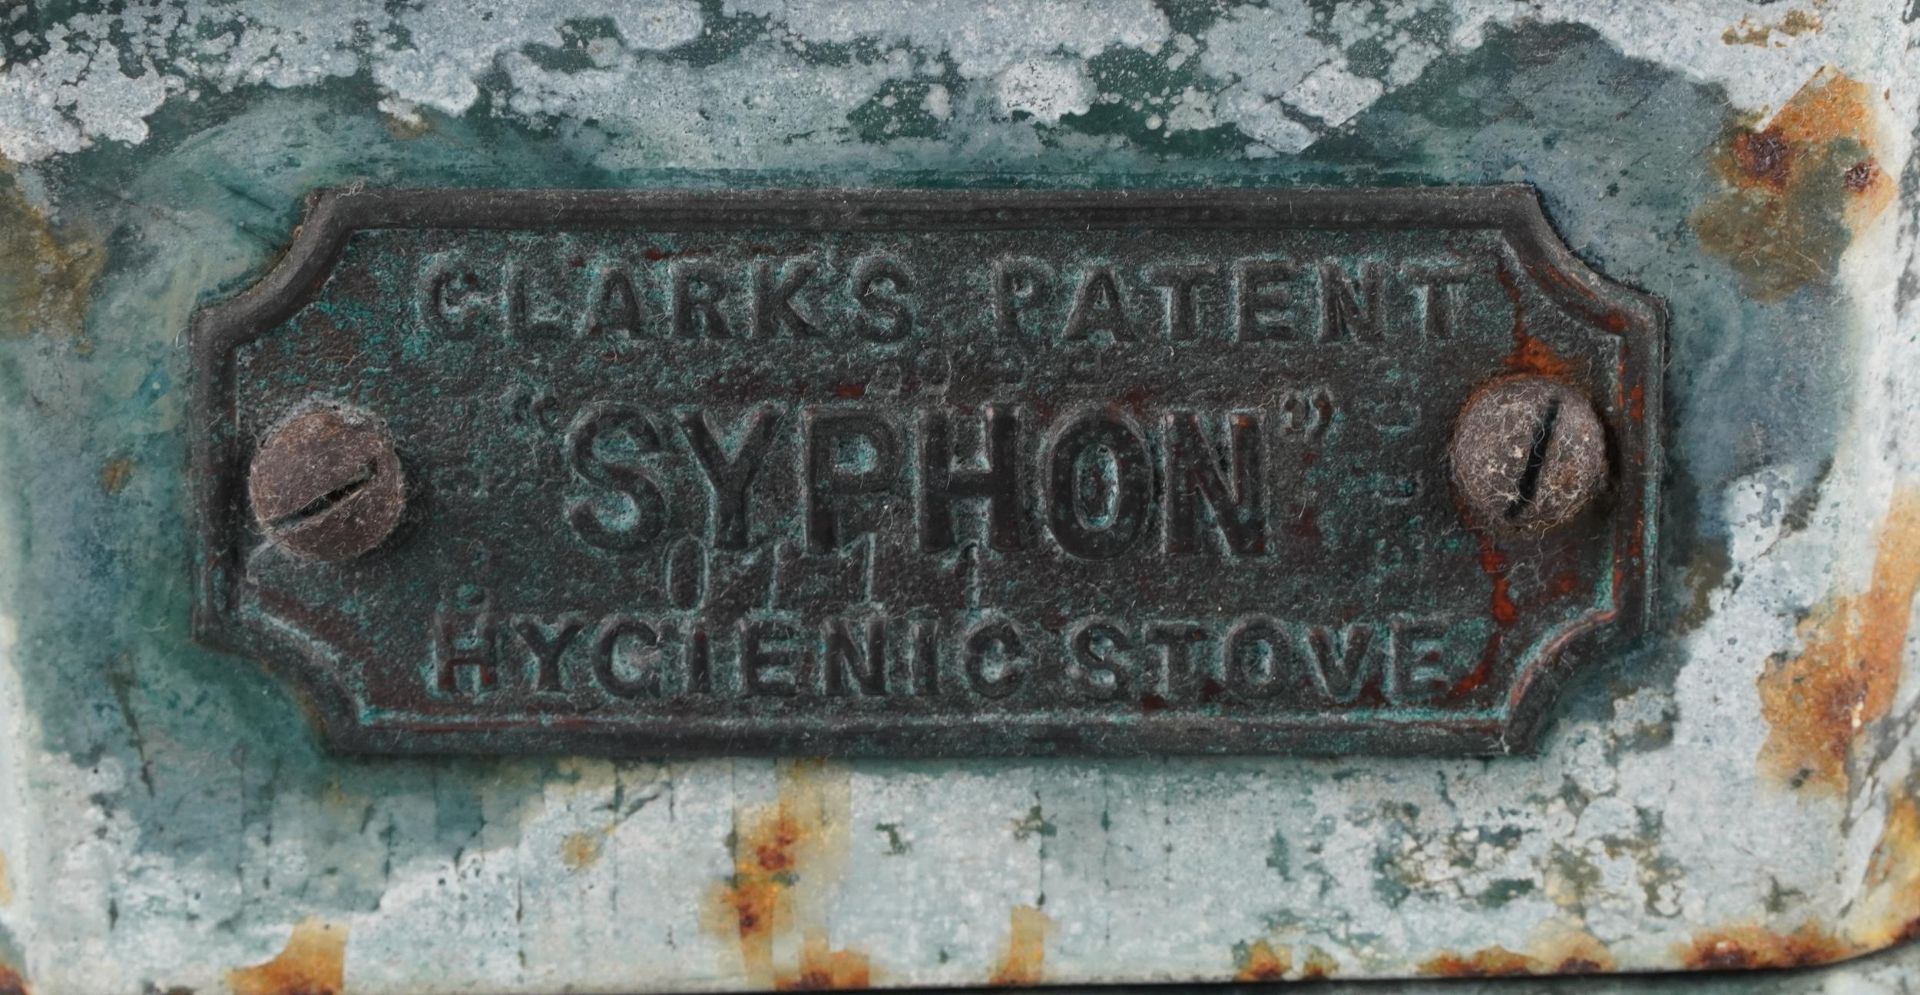 Victorian cast iron green enamelled Clark's patent Syphon Hygienic stove, 119 H x 64 W x 36 D - Bild 4 aus 4